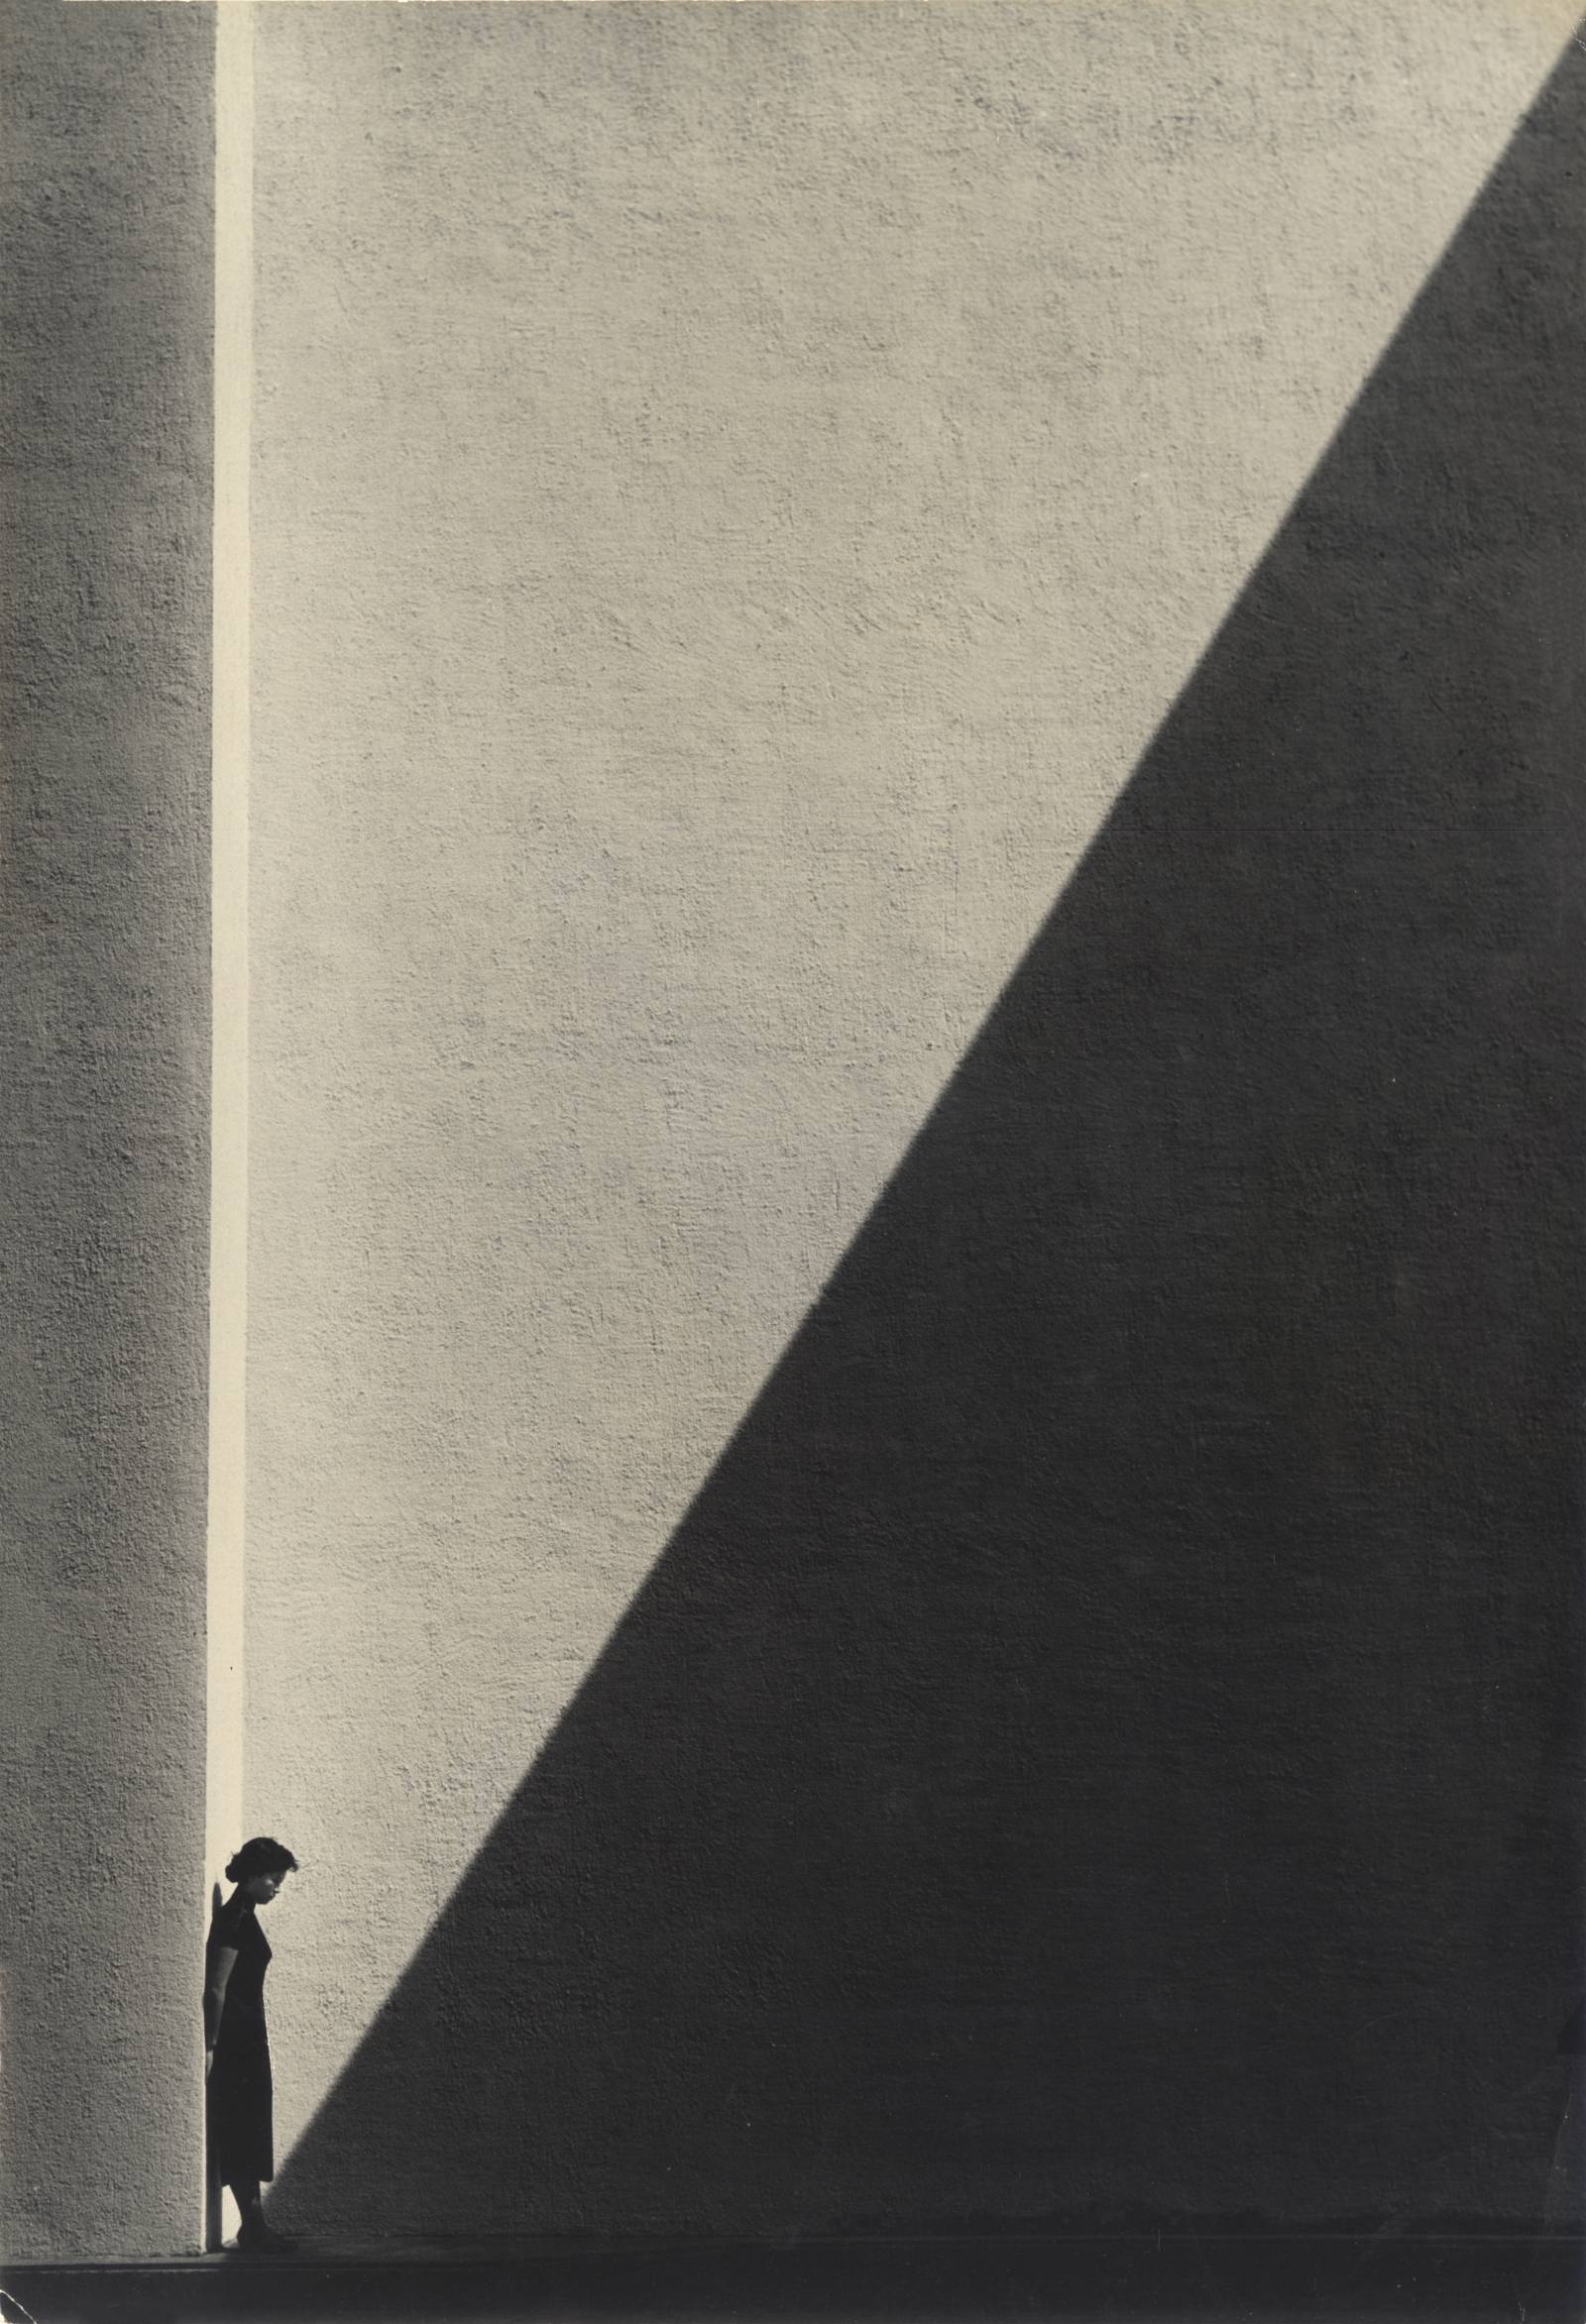 Fan Ho, Approaching Shadow, Hong Kong 1954, vintage print, H49 x 34 cm, Galeria Blue Lotus